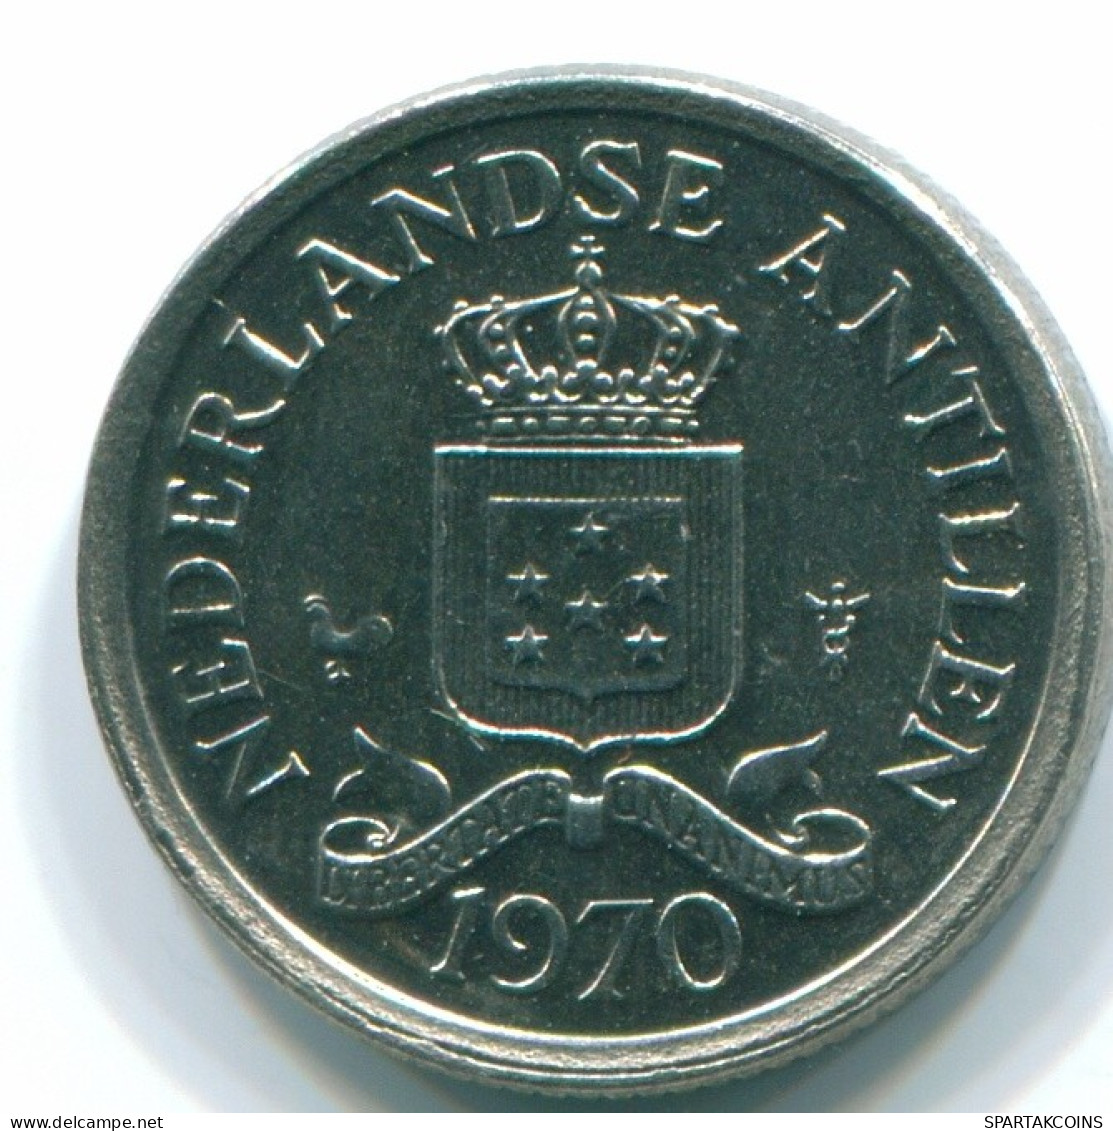 10 CENTS 1970 NIEDERLÄNDISCHE ANTILLEN Nickel Koloniale Münze #S13383.D.A - Netherlands Antilles